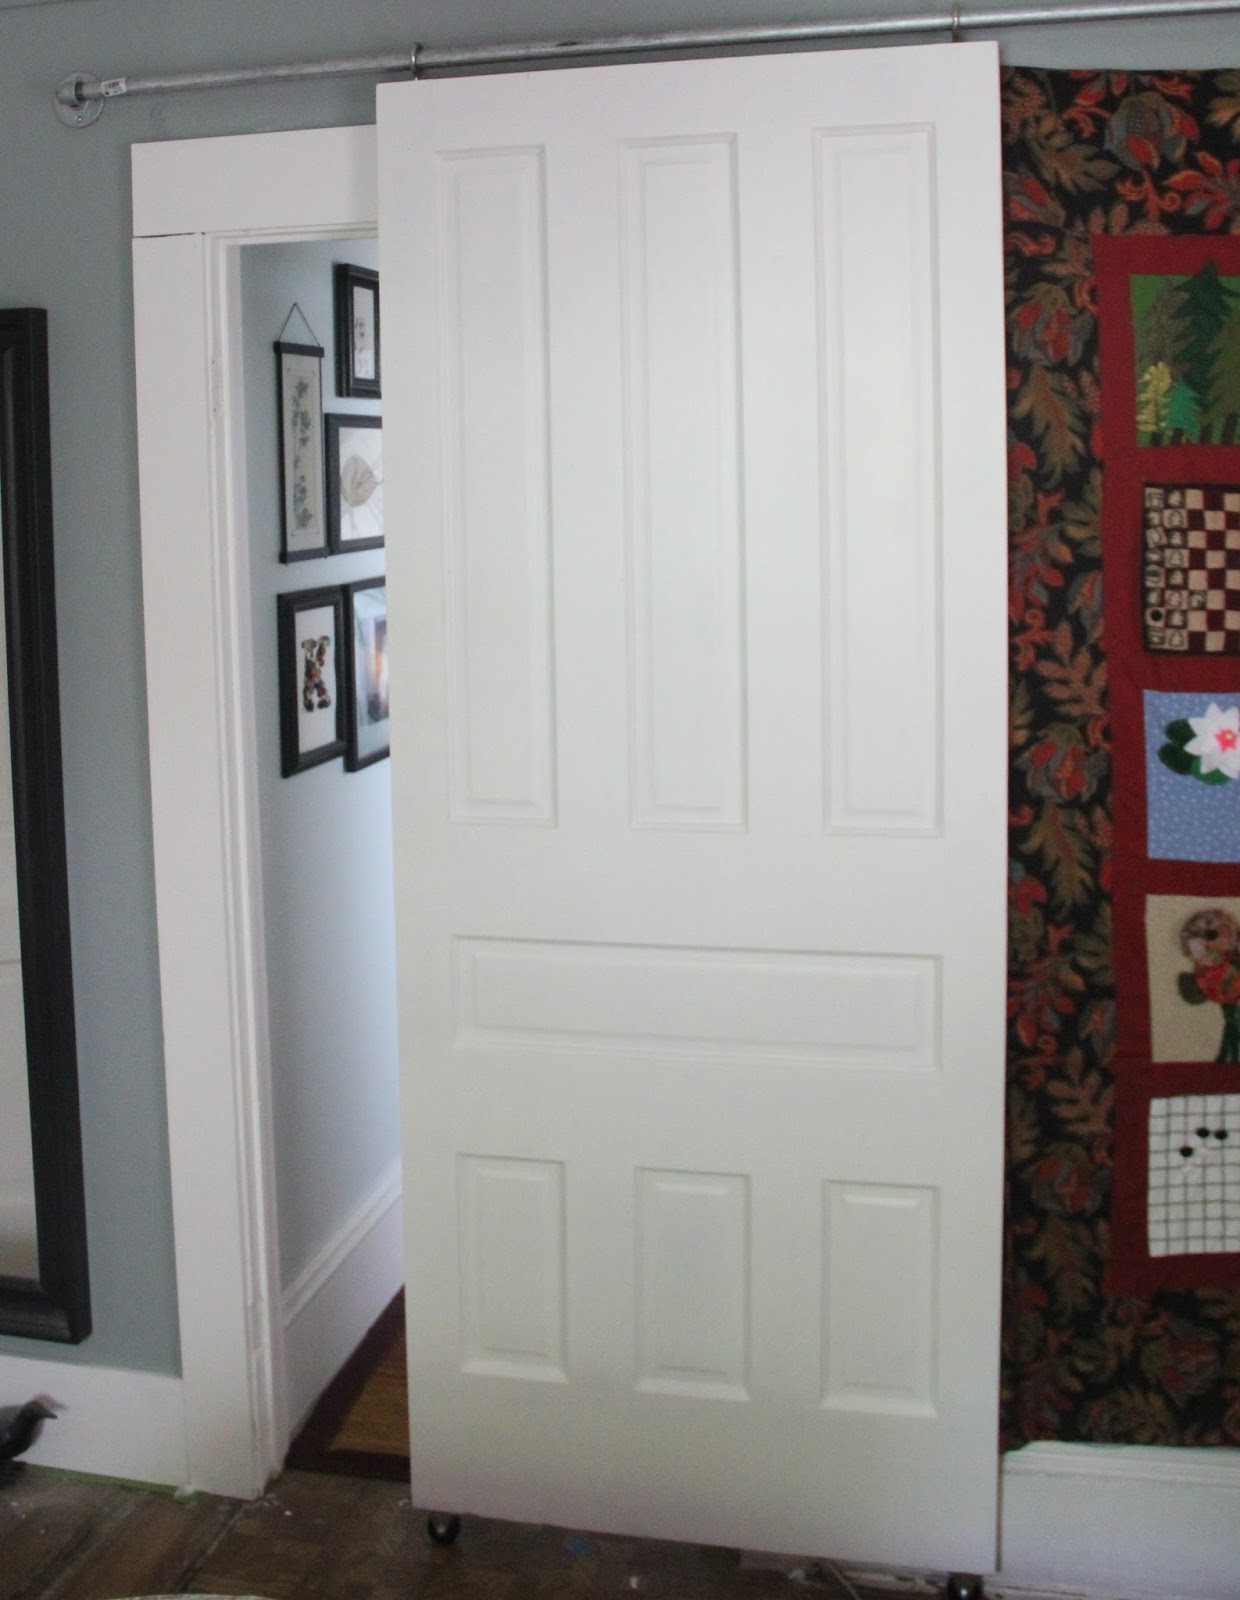 Best ideas about DIY Sliding Door
. Save or Pin EAK A House DIY Sliding Door Now.